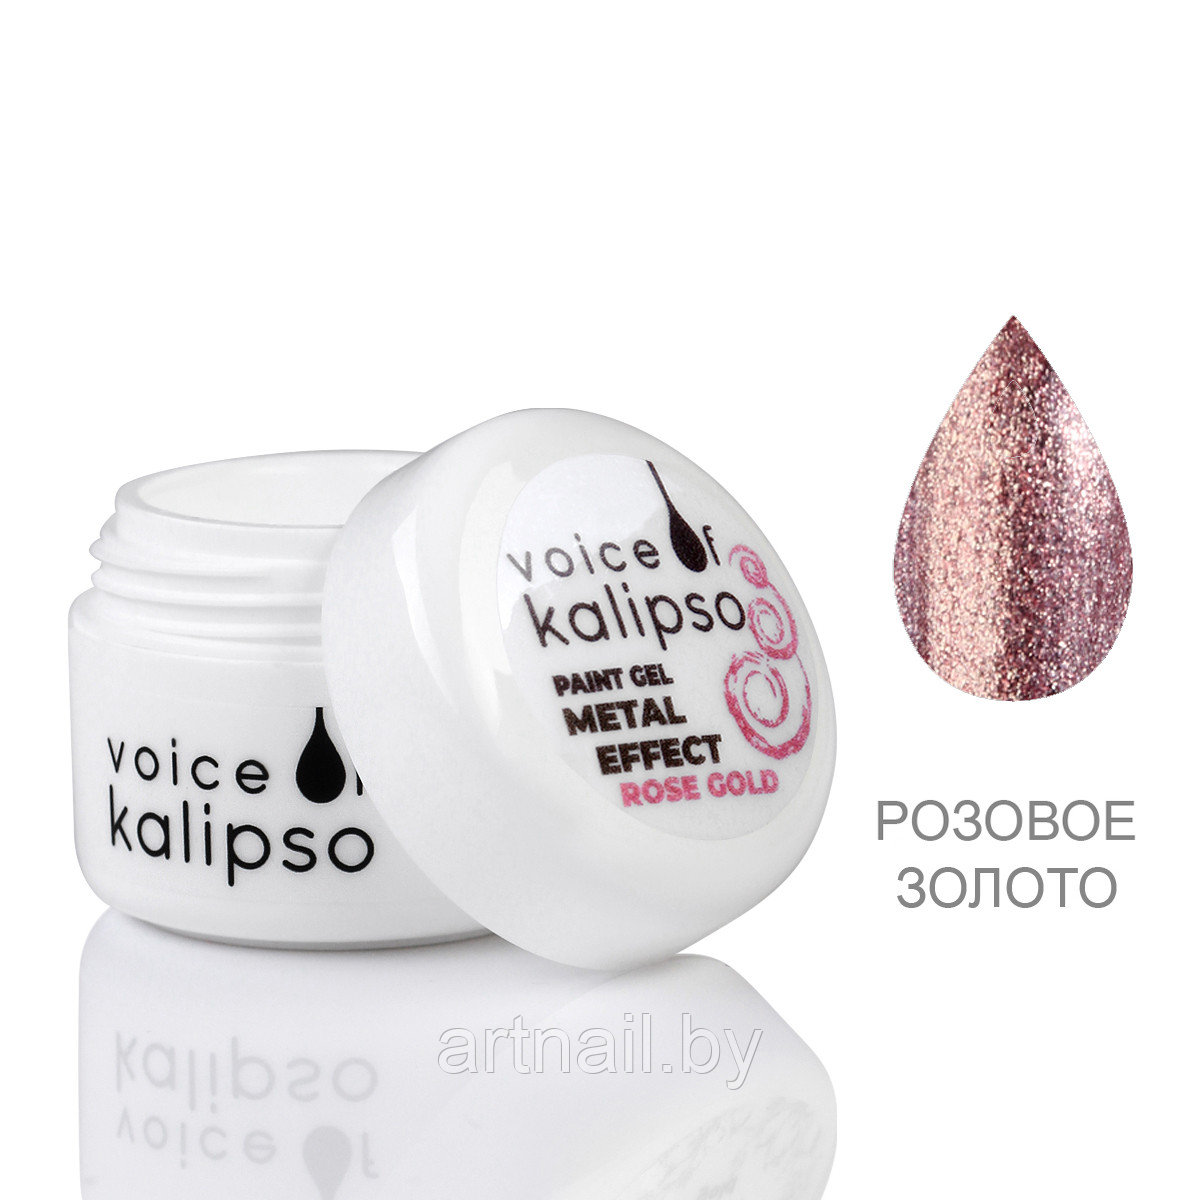 Гель-краска Voice of Kalipso METAL EFFECT Розовое золото, 5мл